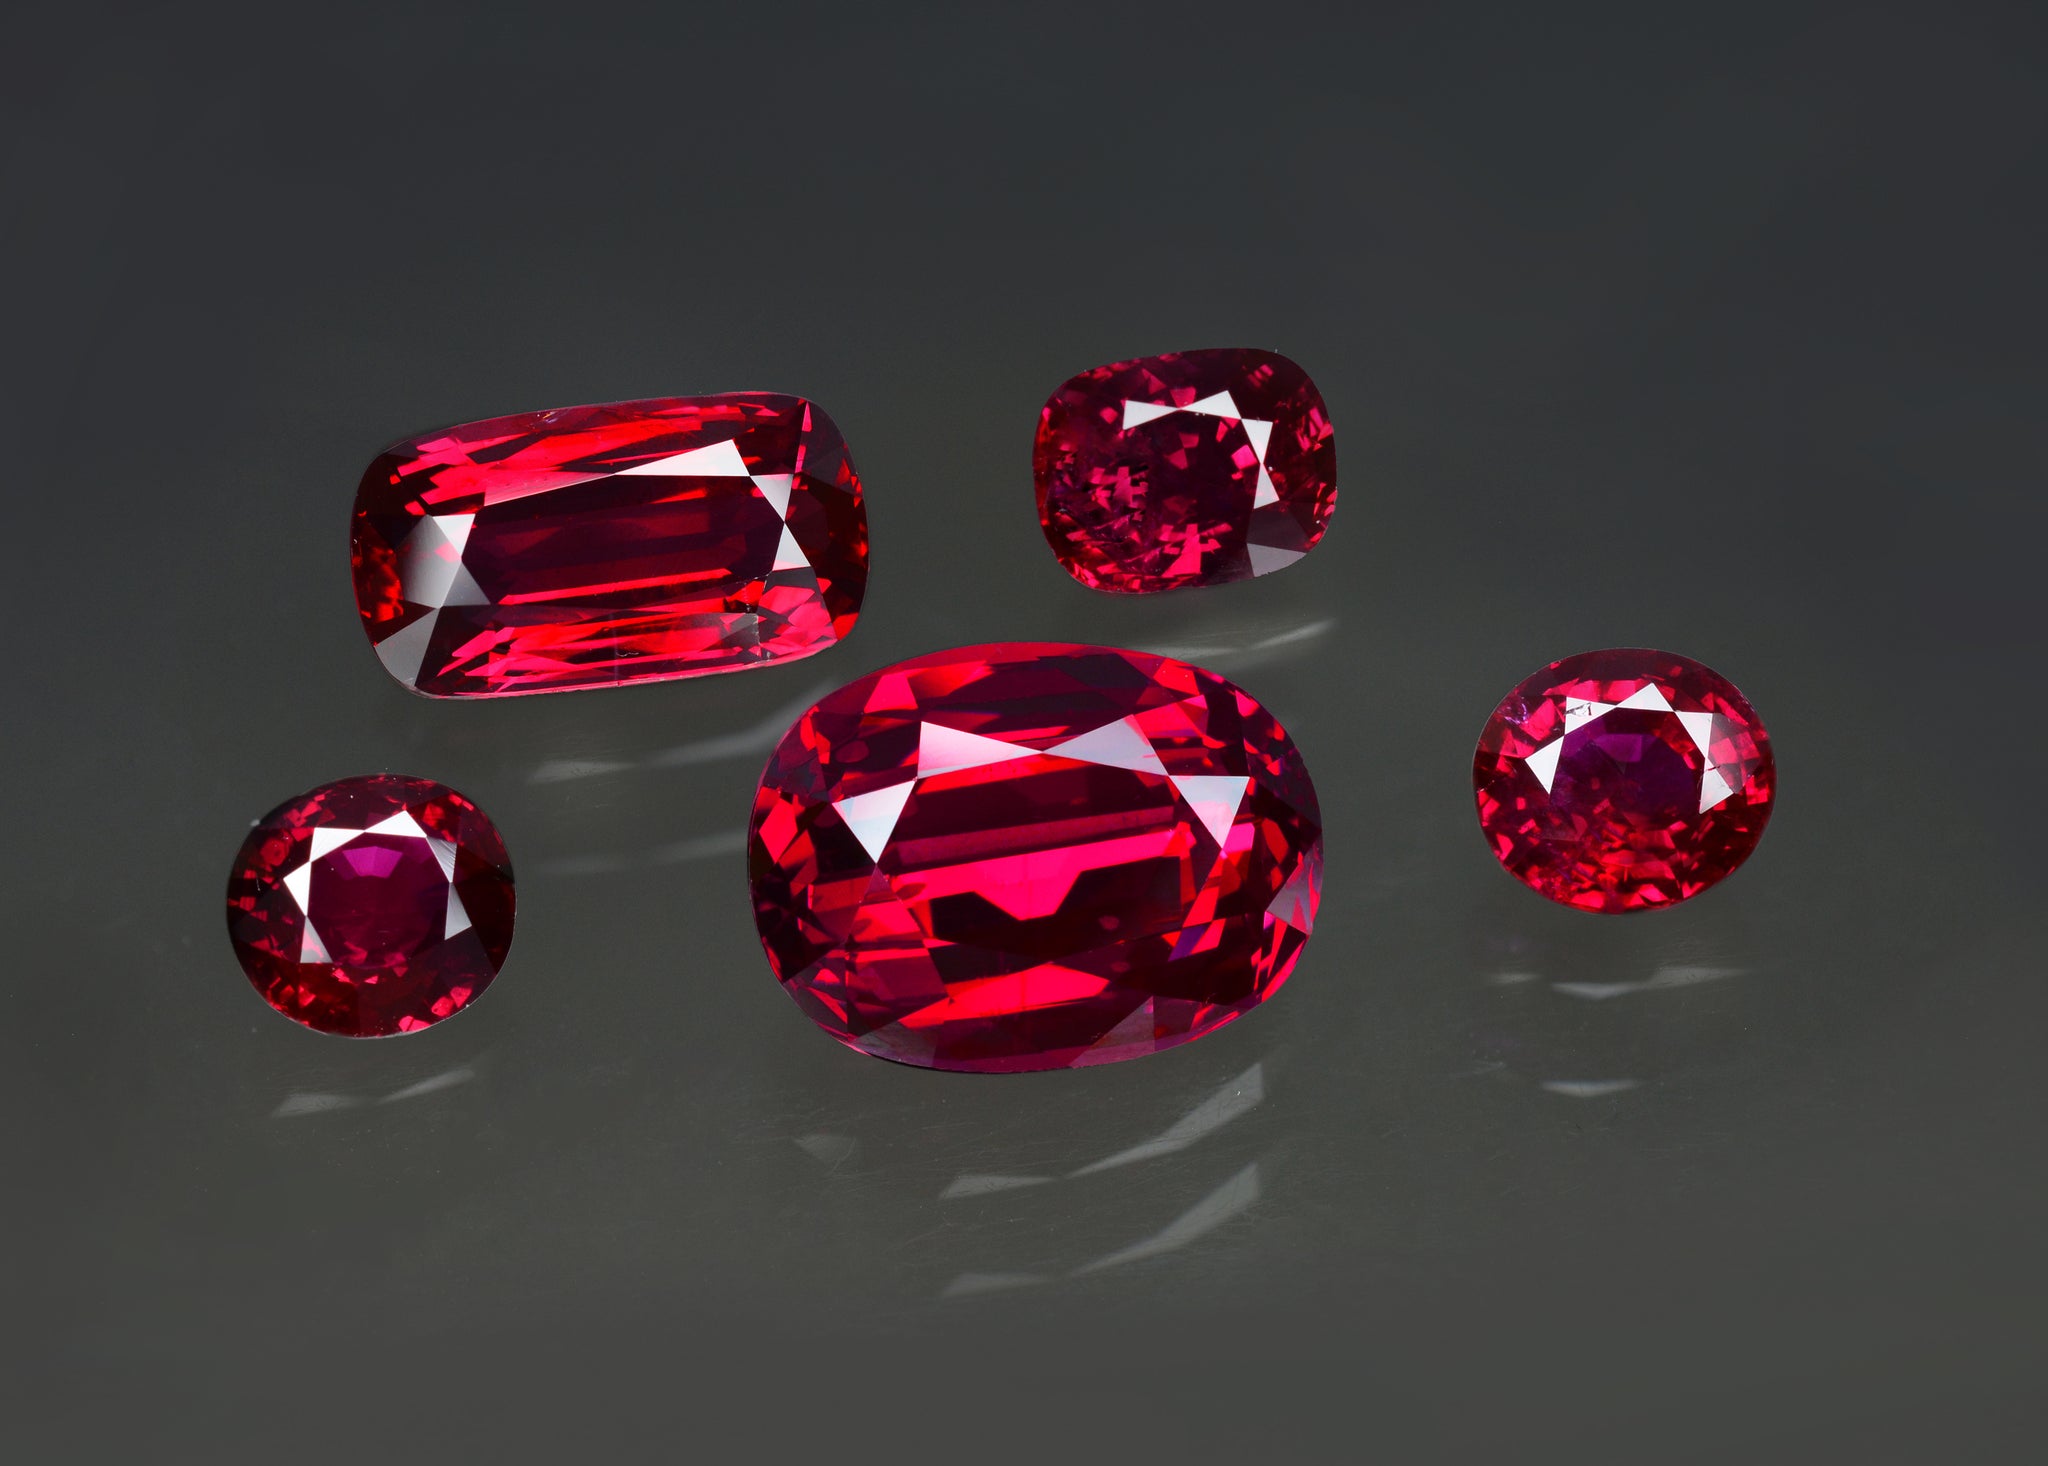 Gemstones for Sale  Shipping Natural Gemstones Worldwide